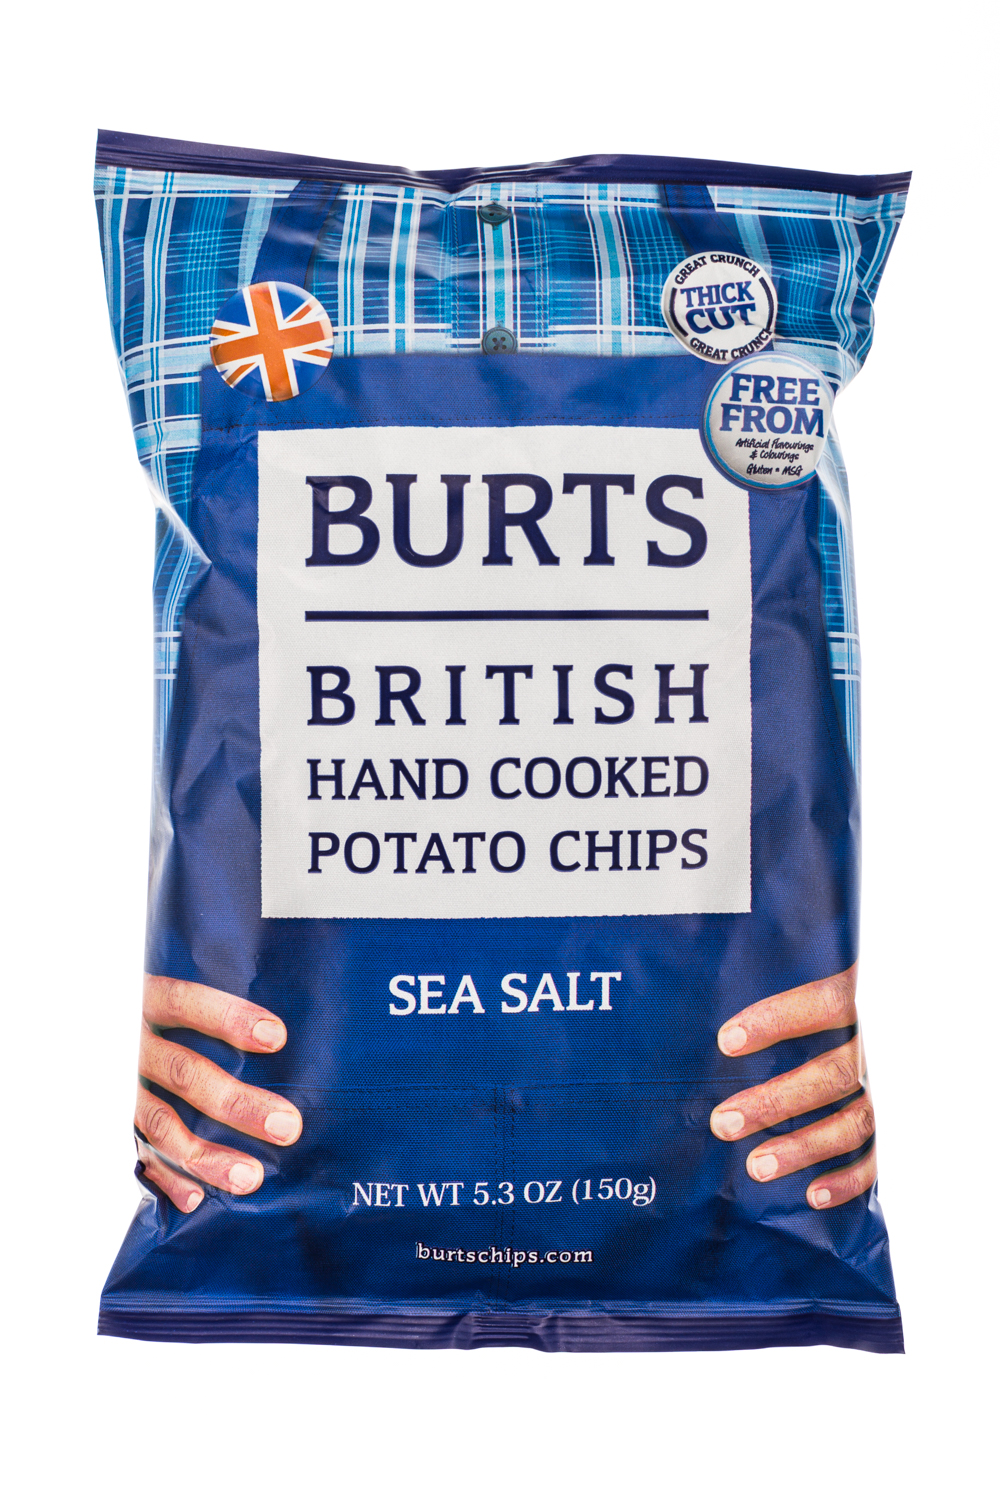 Sea Salt chips